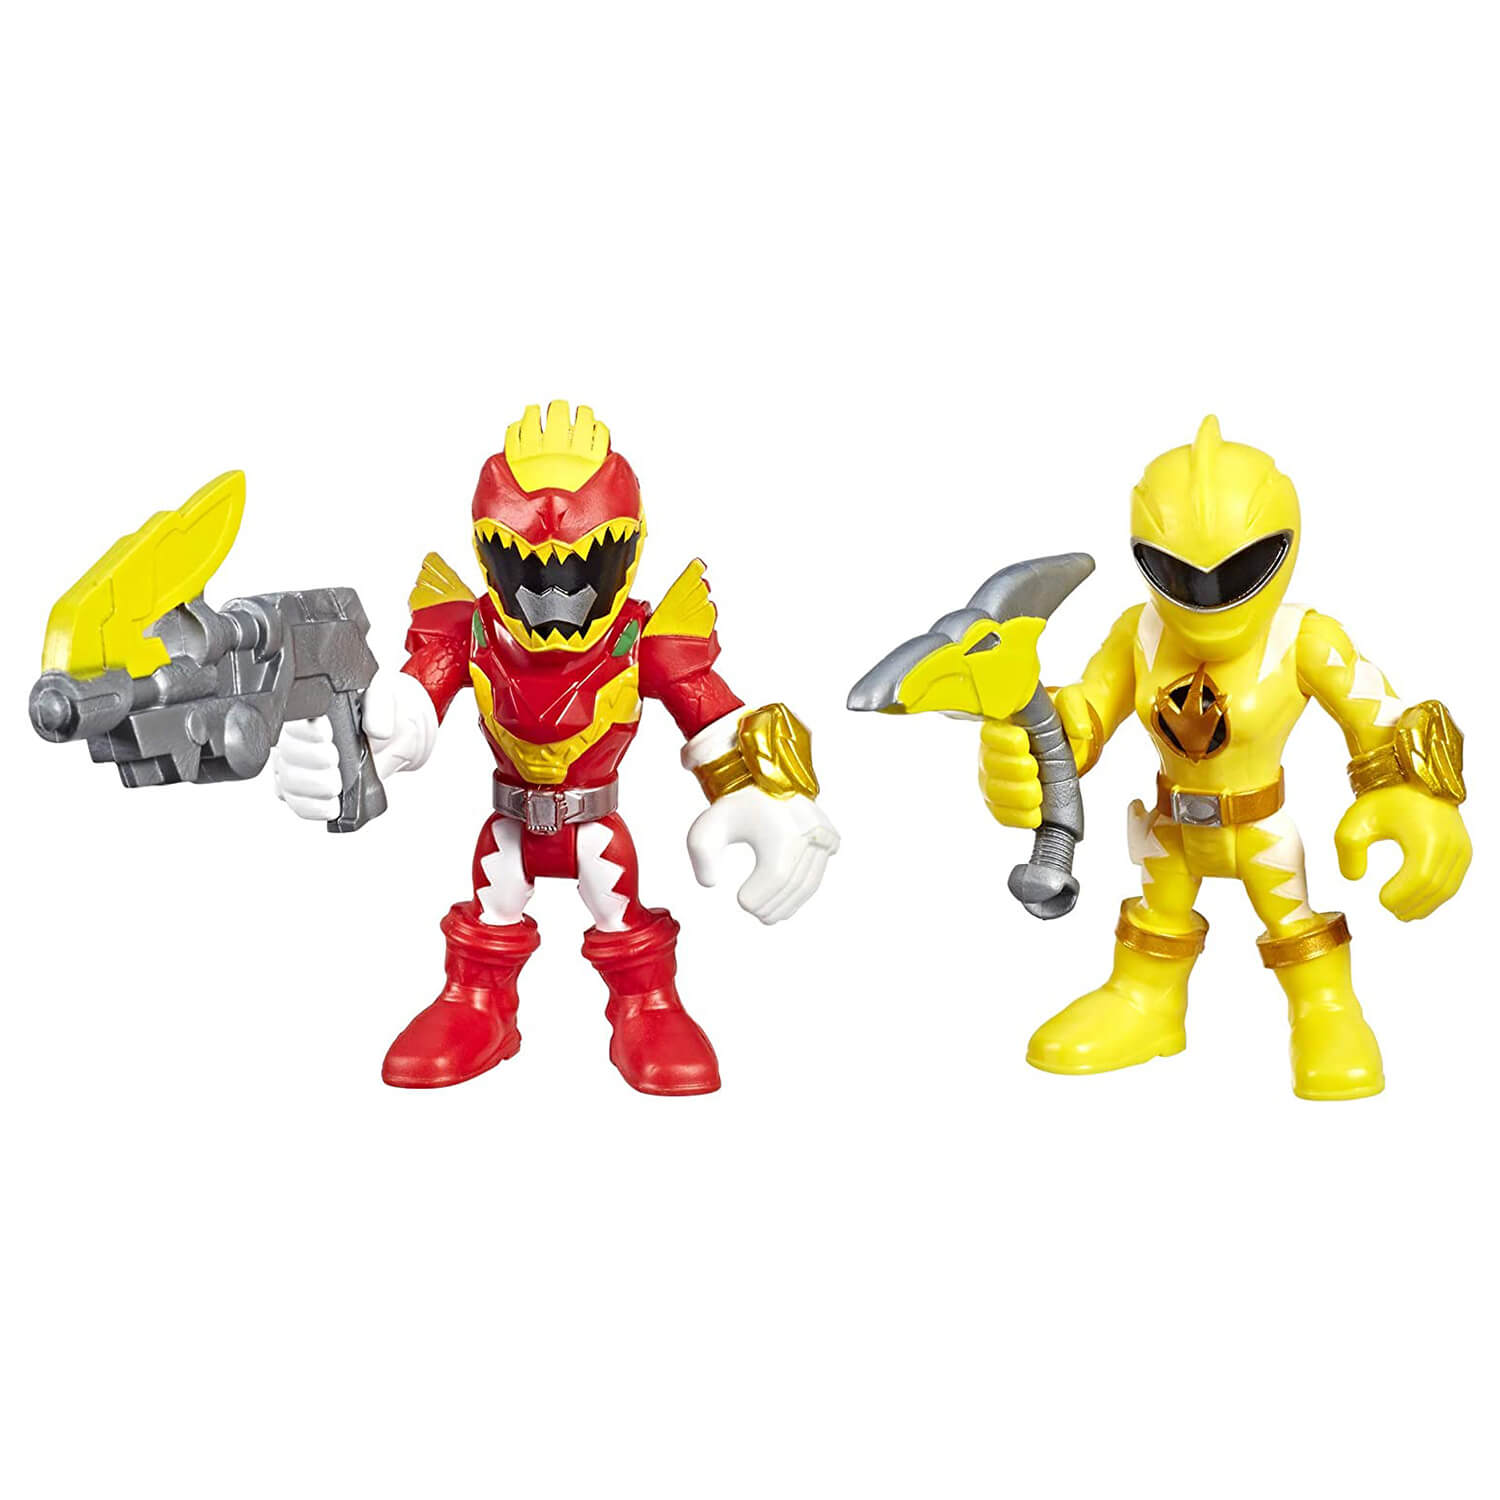 Playskool Heroes Power Rangers Red Ranger & Yellow Ranger Figures